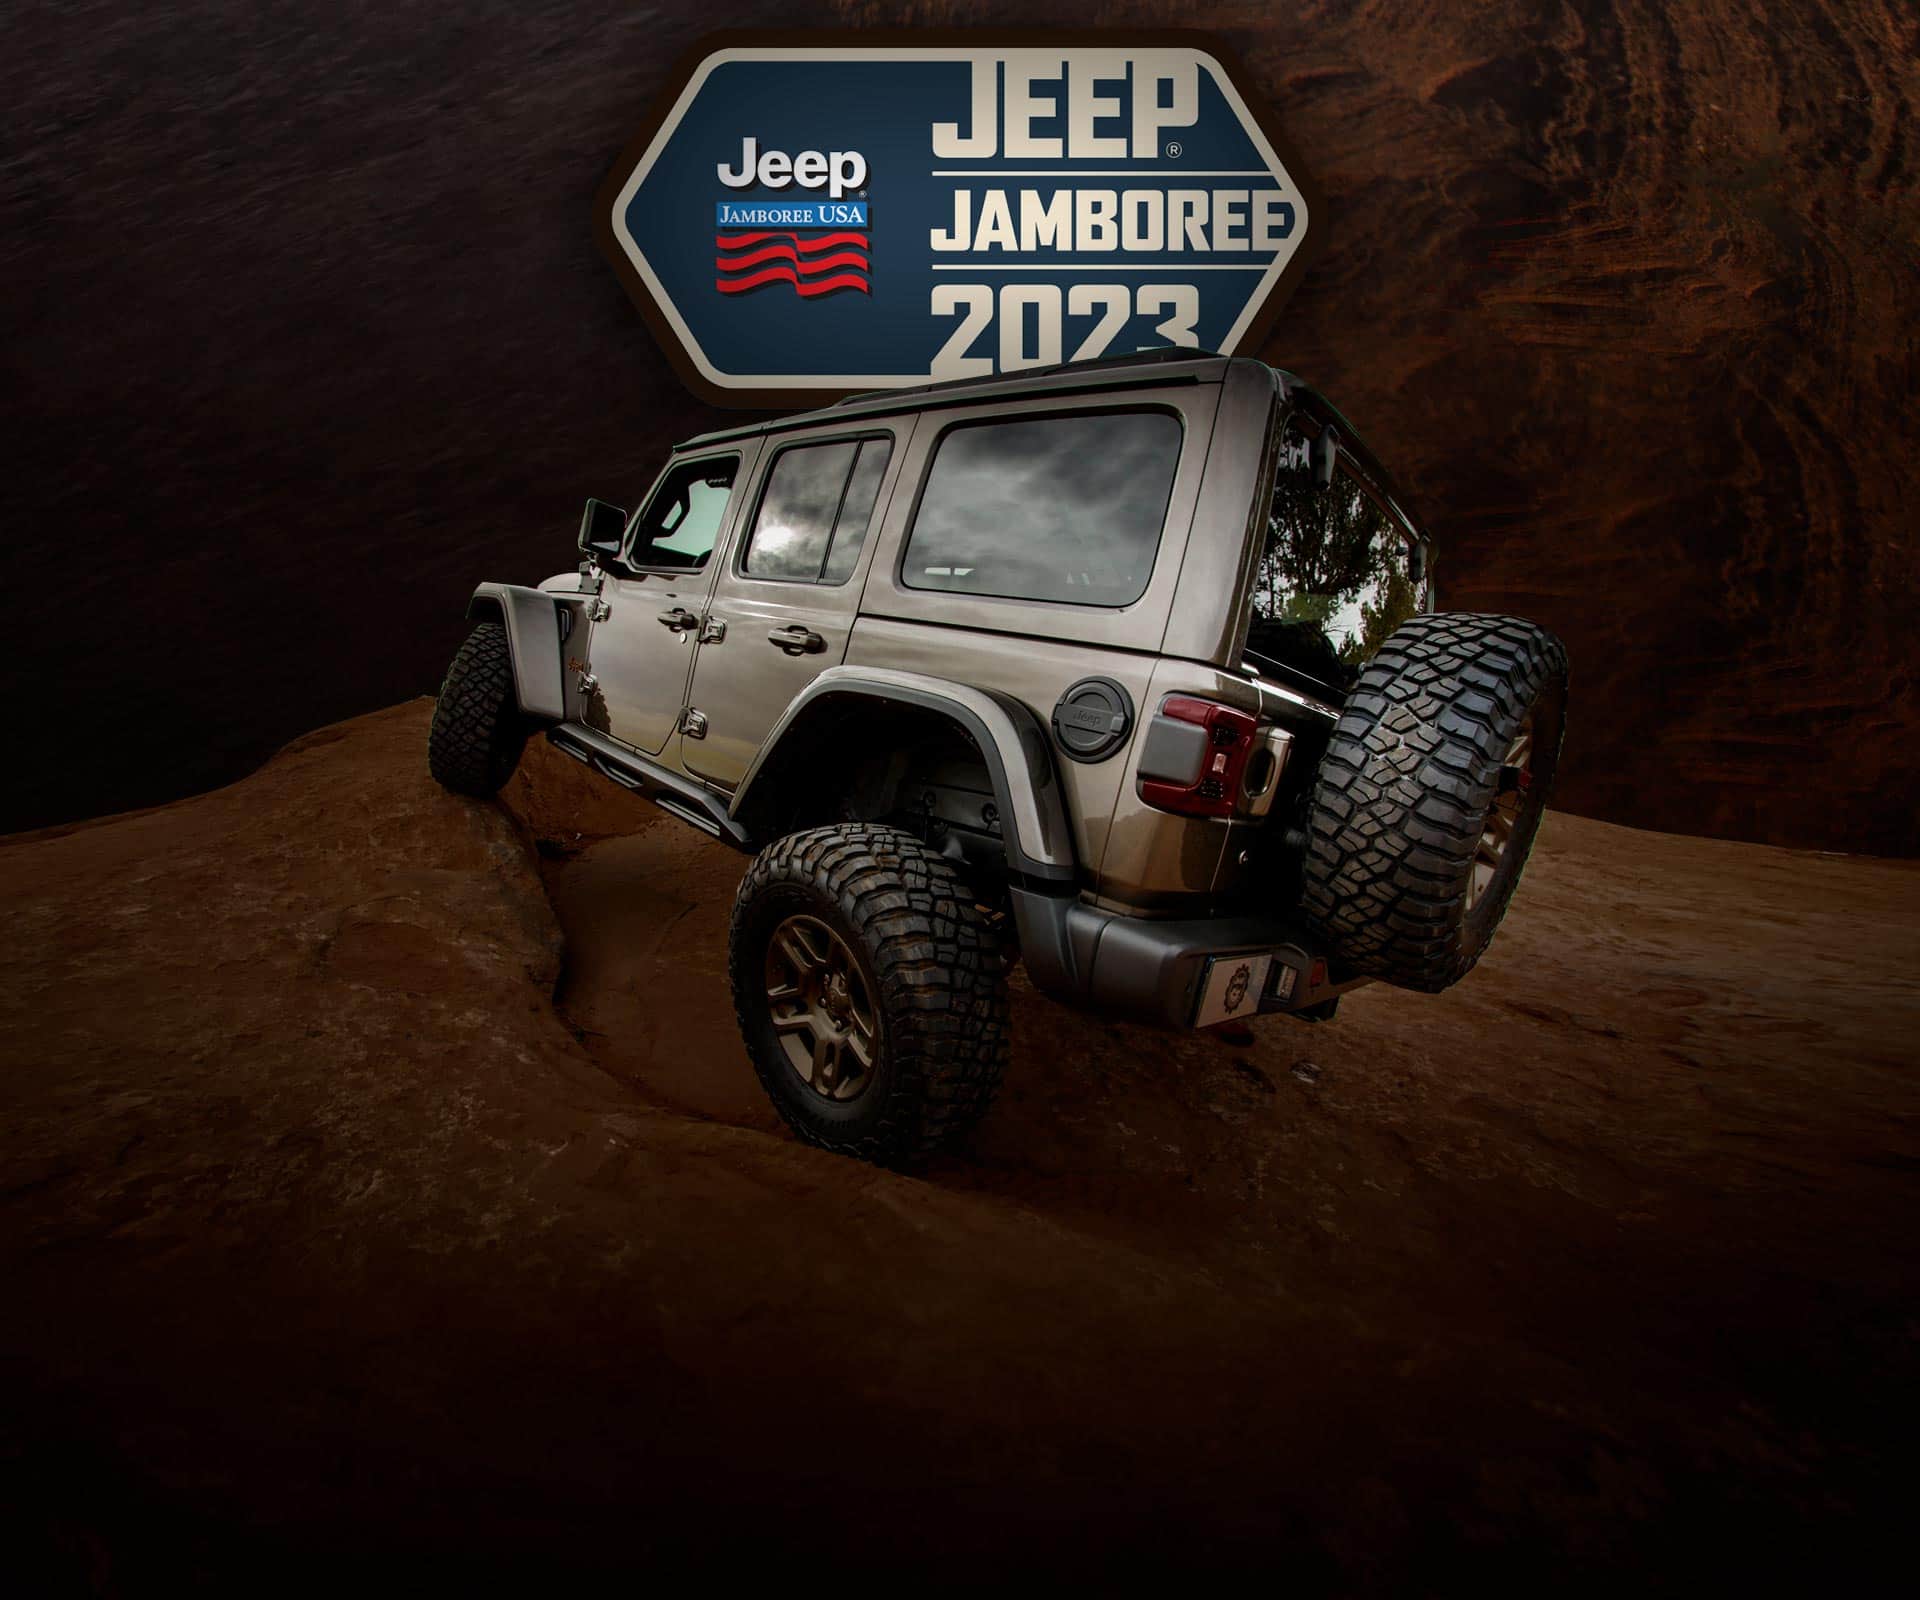 Jeep Jamboree USA. Jeep Jamboree 2023. Un Jeep Wrangler Unlimited trepando por una superficie rocosa irregular.